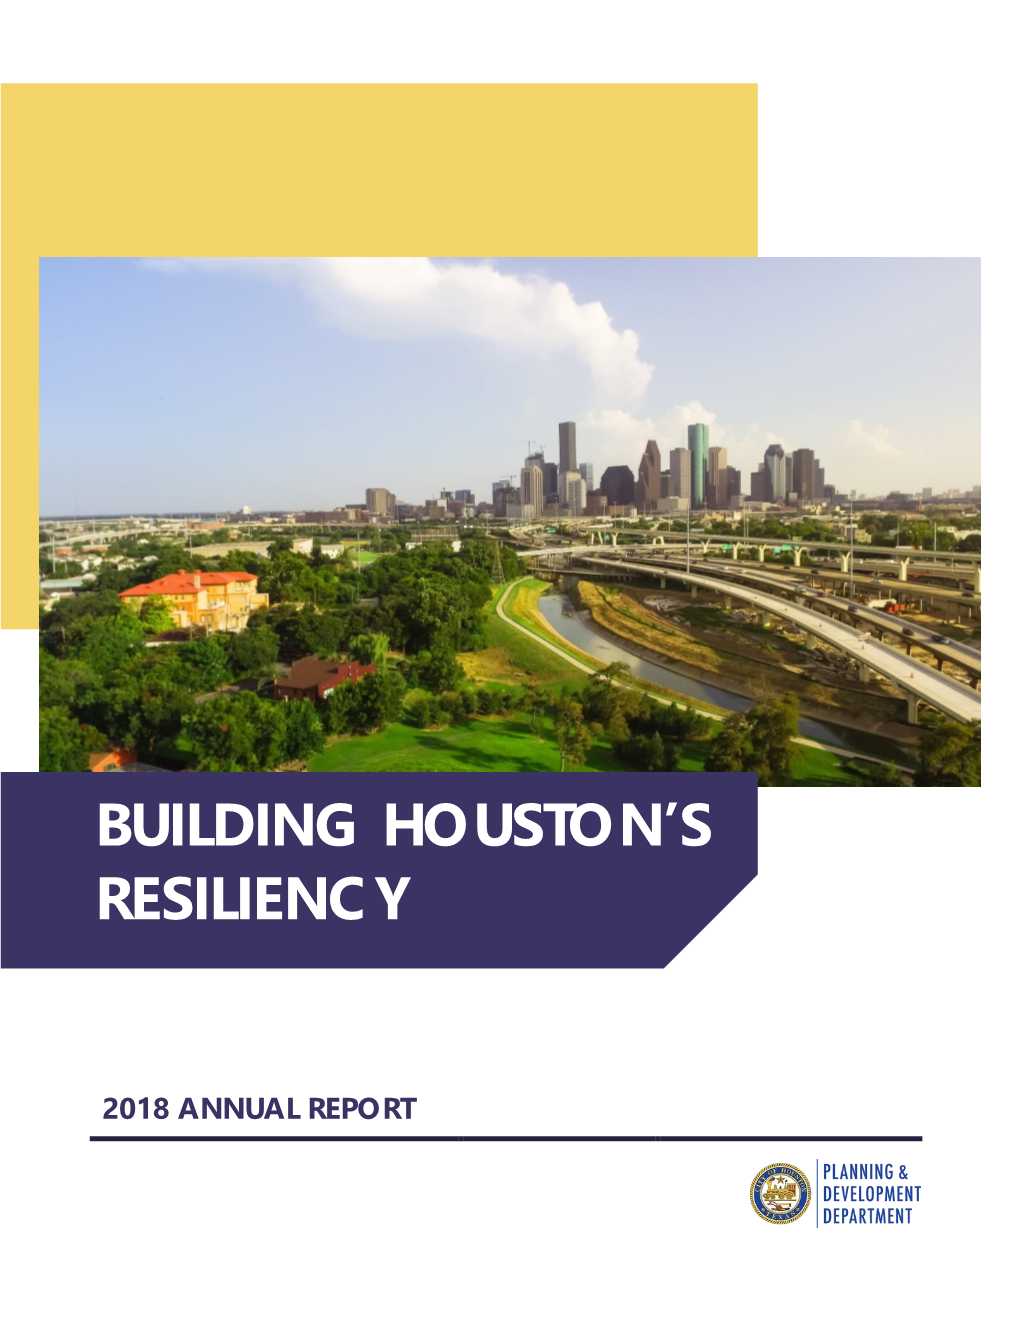 Building Houston's Resiliency